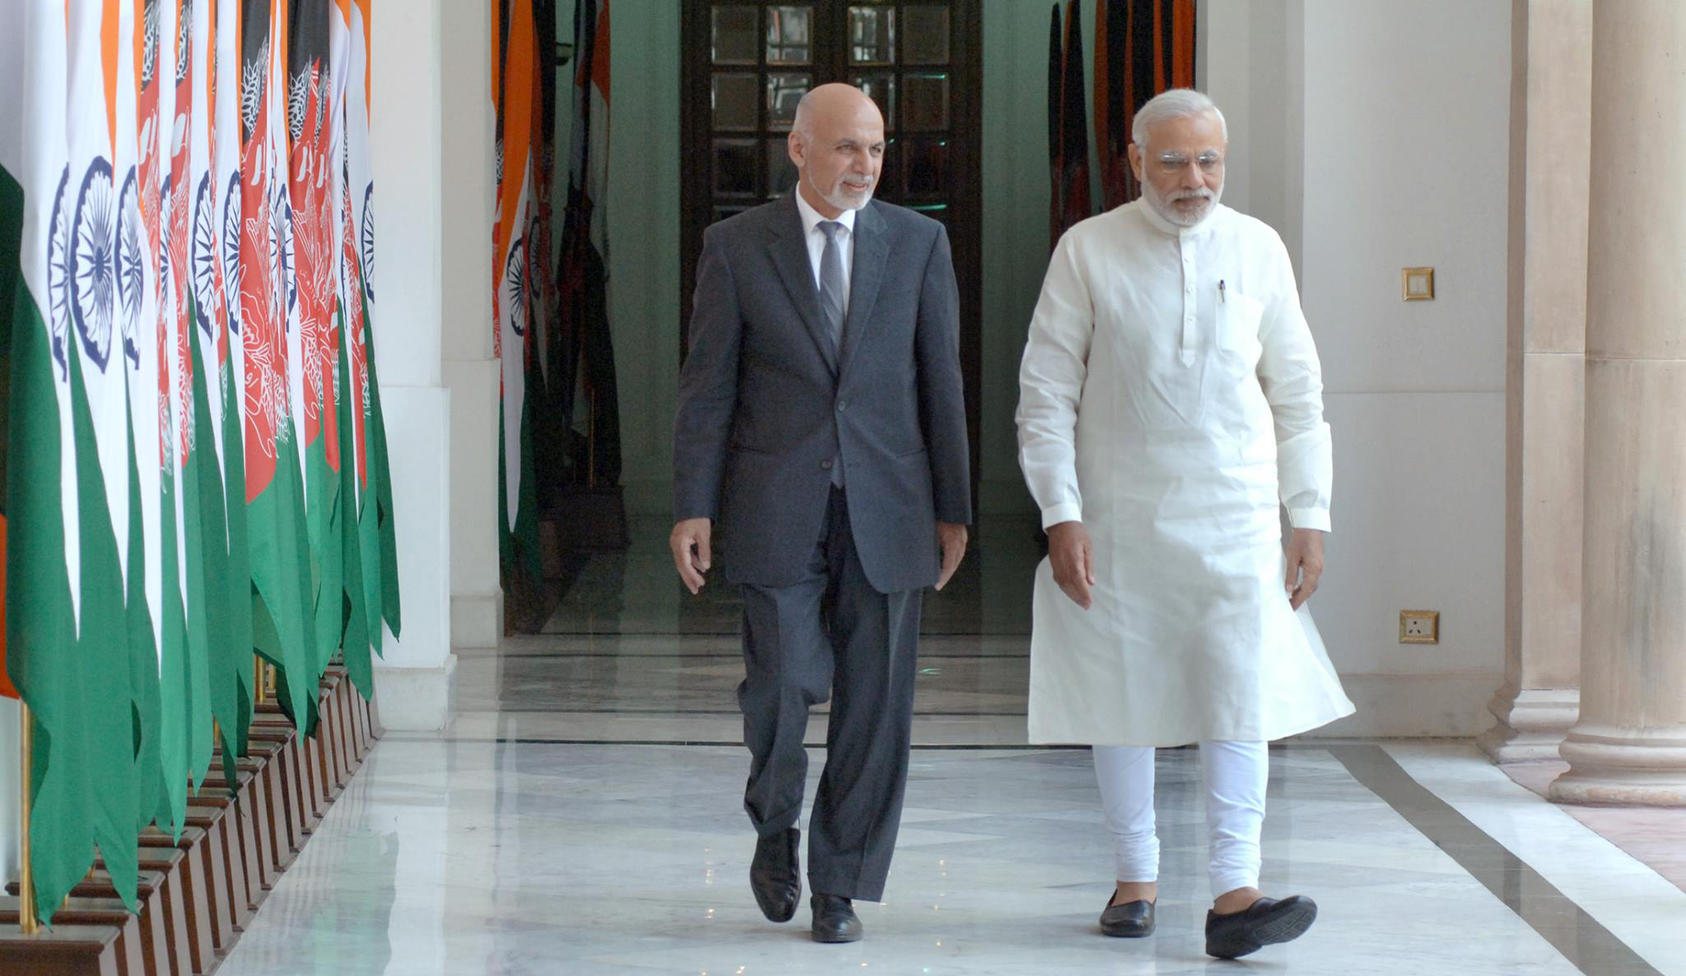 Afghan President Ashraf Ghani meets with Indian Prime Minister Narendra Modi in 2015. (Manoj Kumar/Prime Minister’s Office)